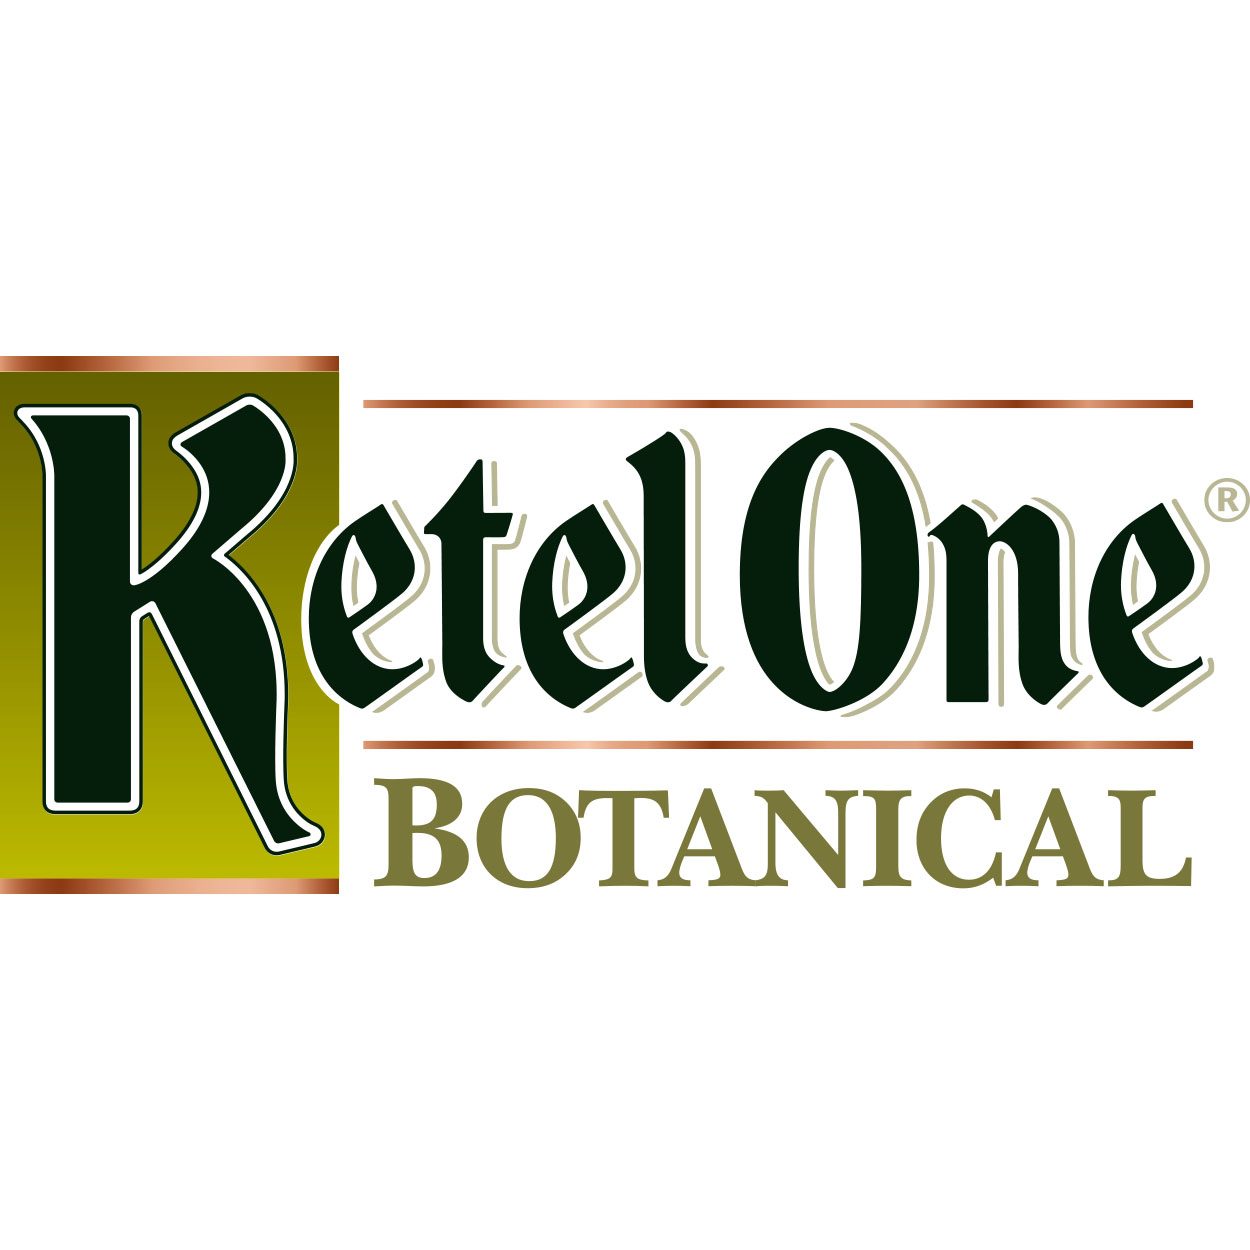 Ketel One Logo